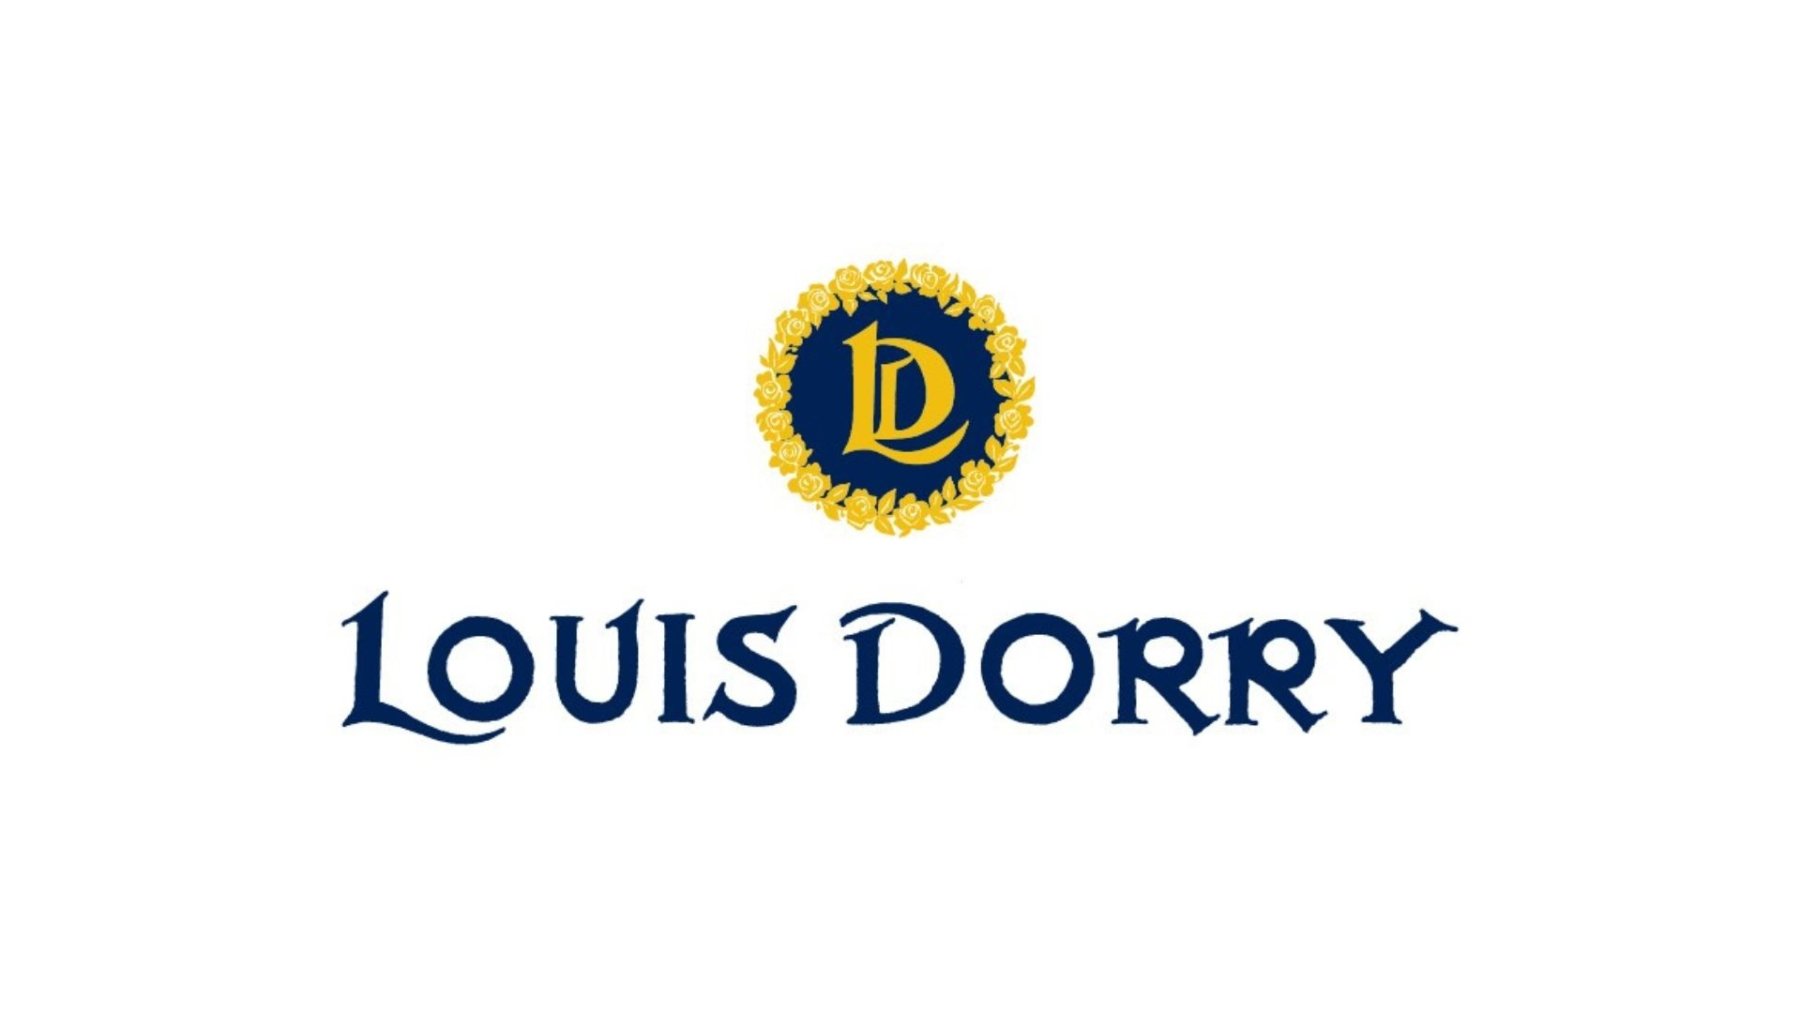 DOMAINE LOUIS DORRY